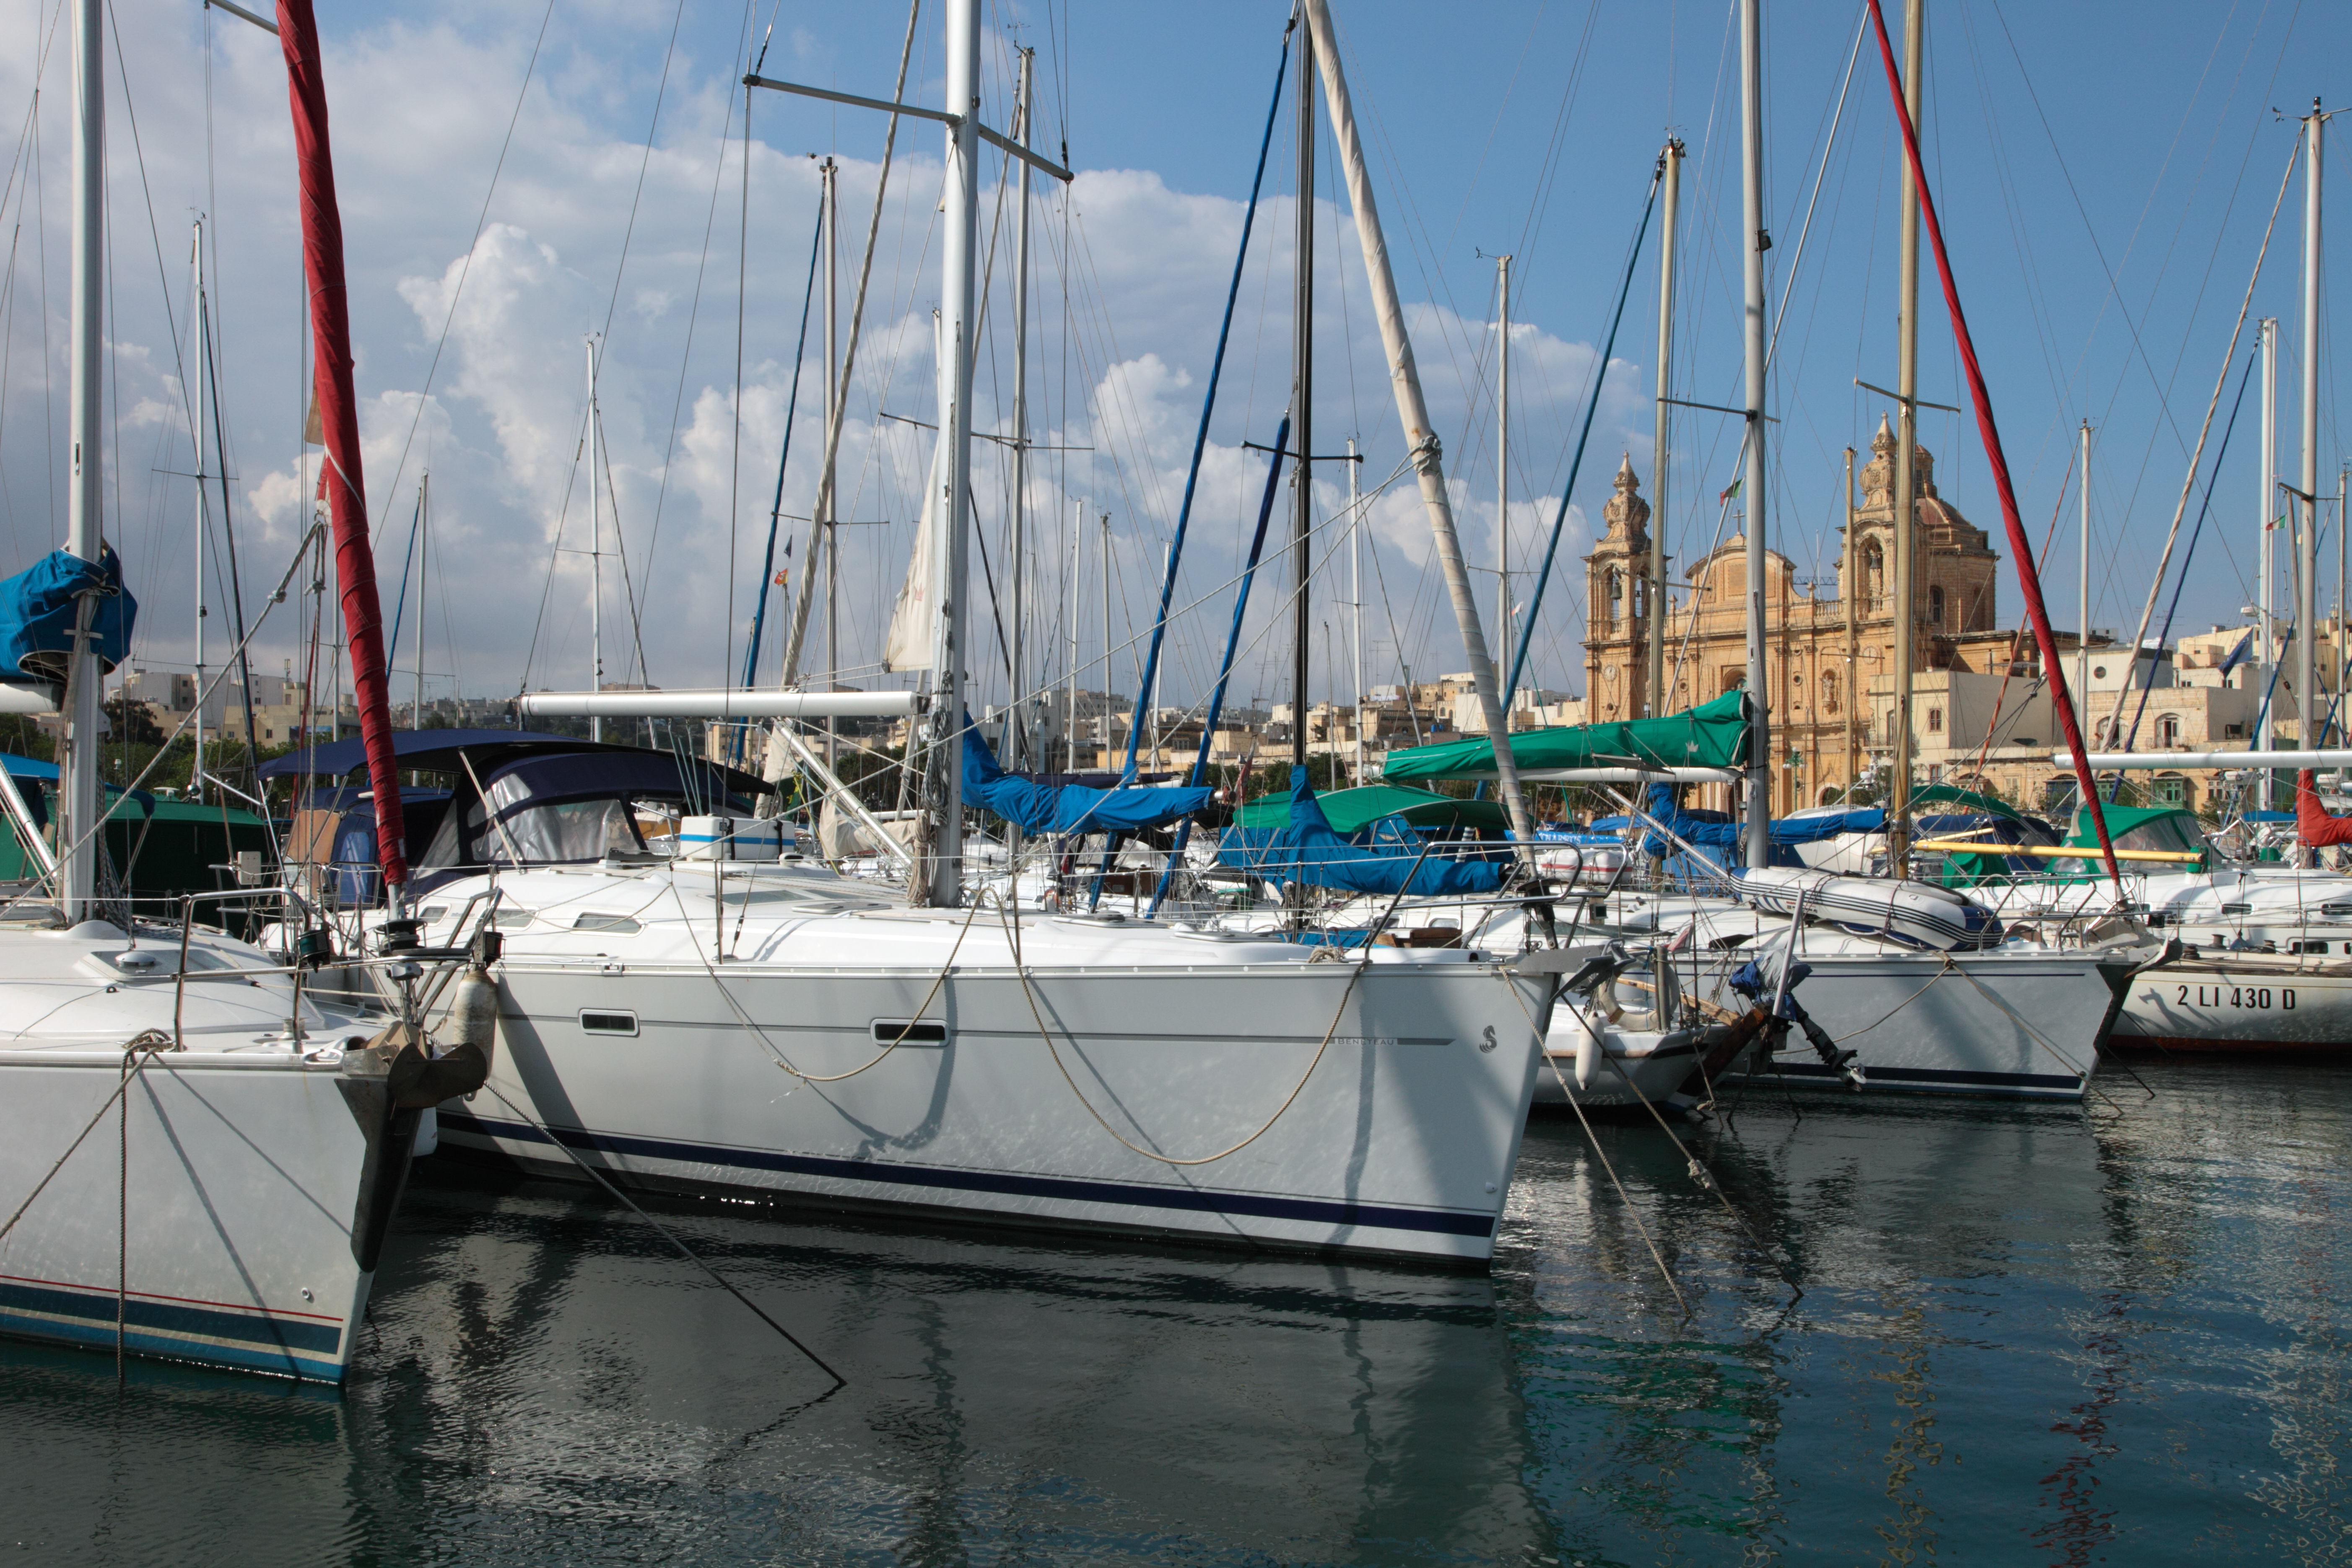 File:Msida-marina-boats.jpg - Wikimedia Commons